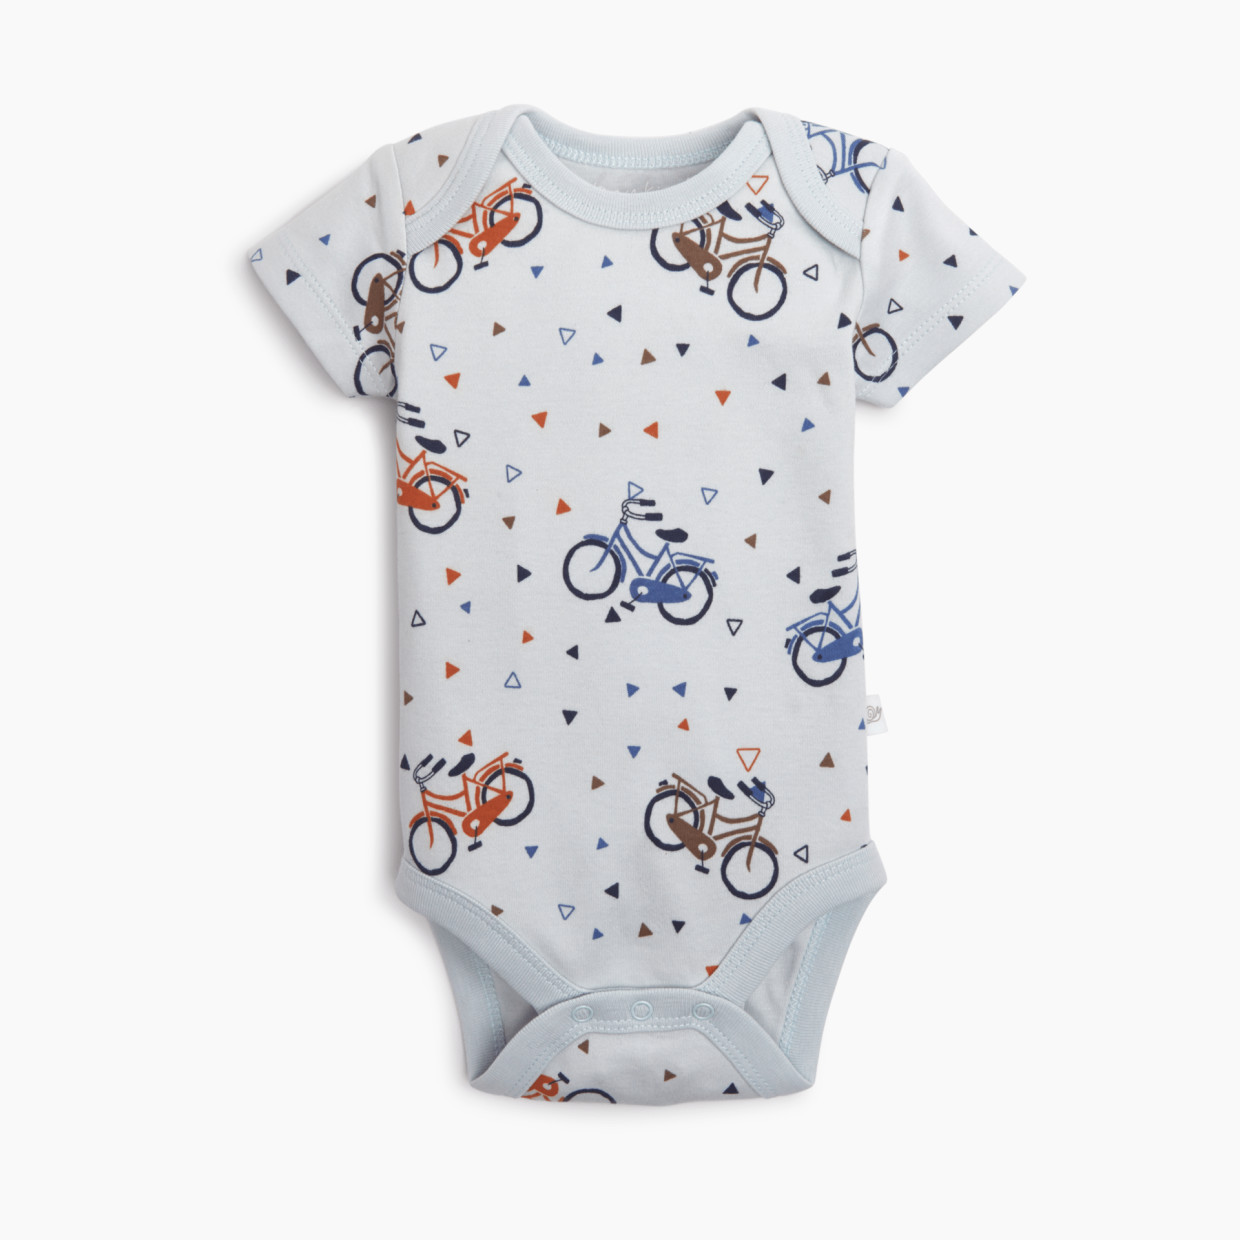 Tiny Kind Printed Short Sleeve Organic Cotton Bodysuit - Bicycle, 6-9 M.